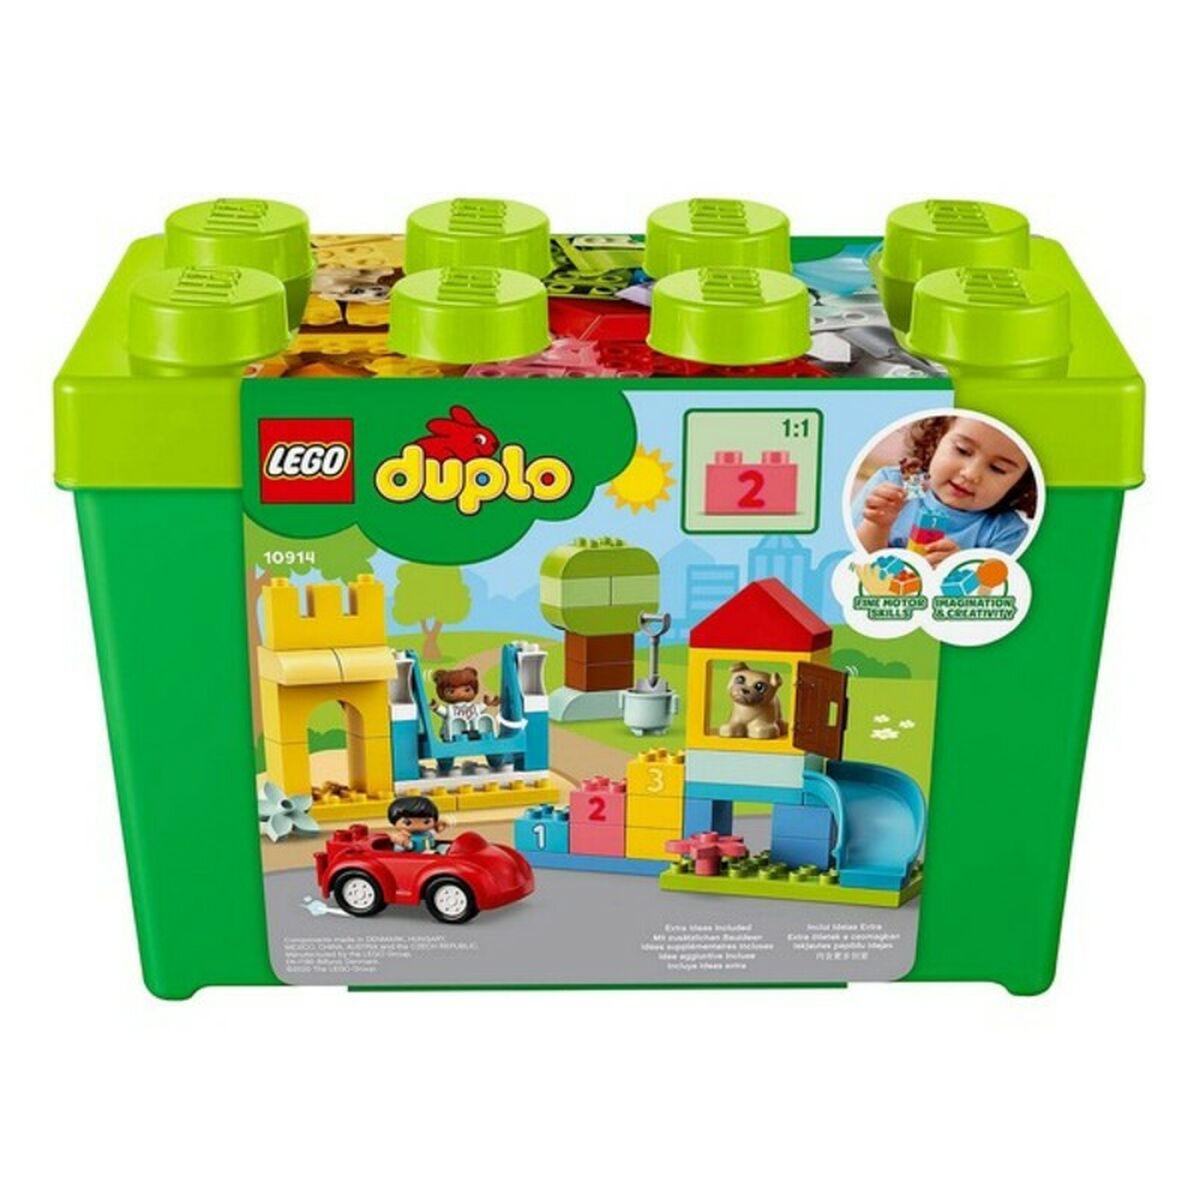 Lego Duplo Deluxe Brick Box Lego 10914 (85 pcs)